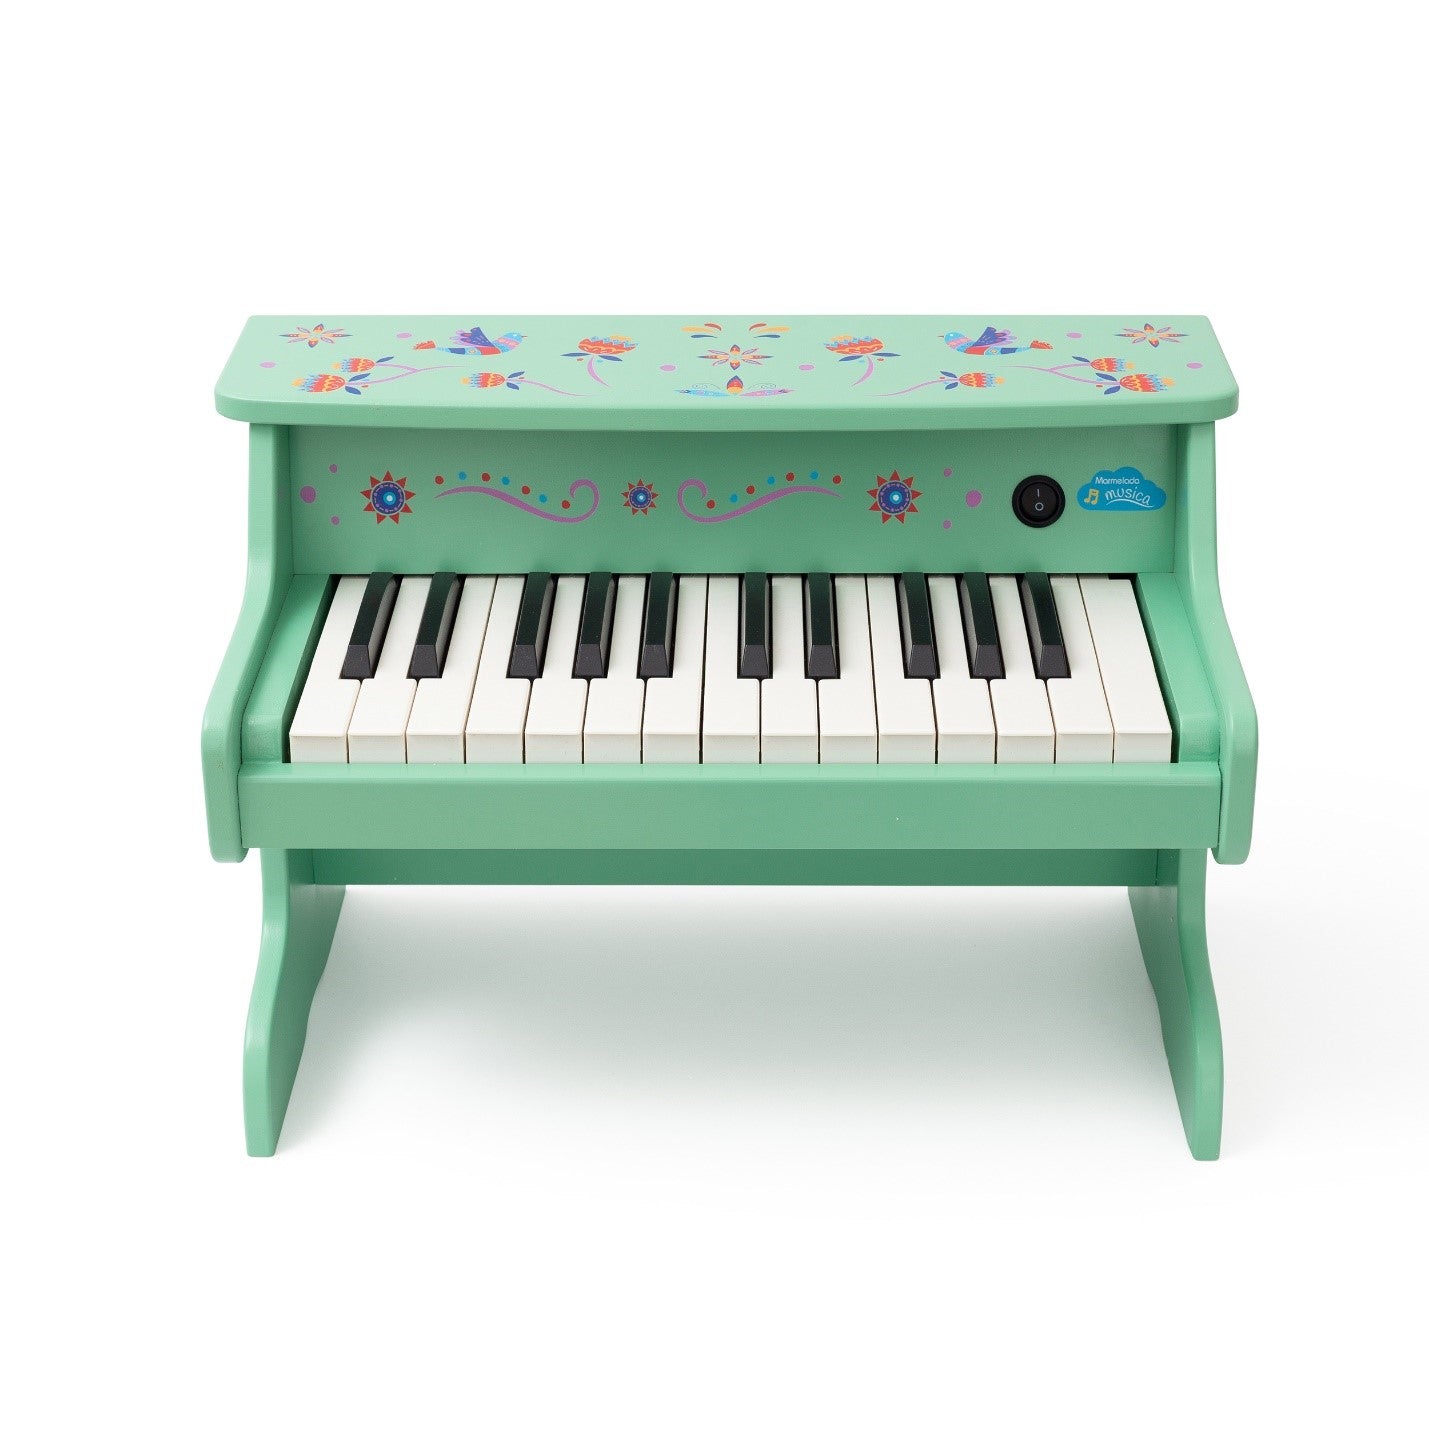 Happy Bird, Green Piano, Digital Piano for Kids with 25 Keys